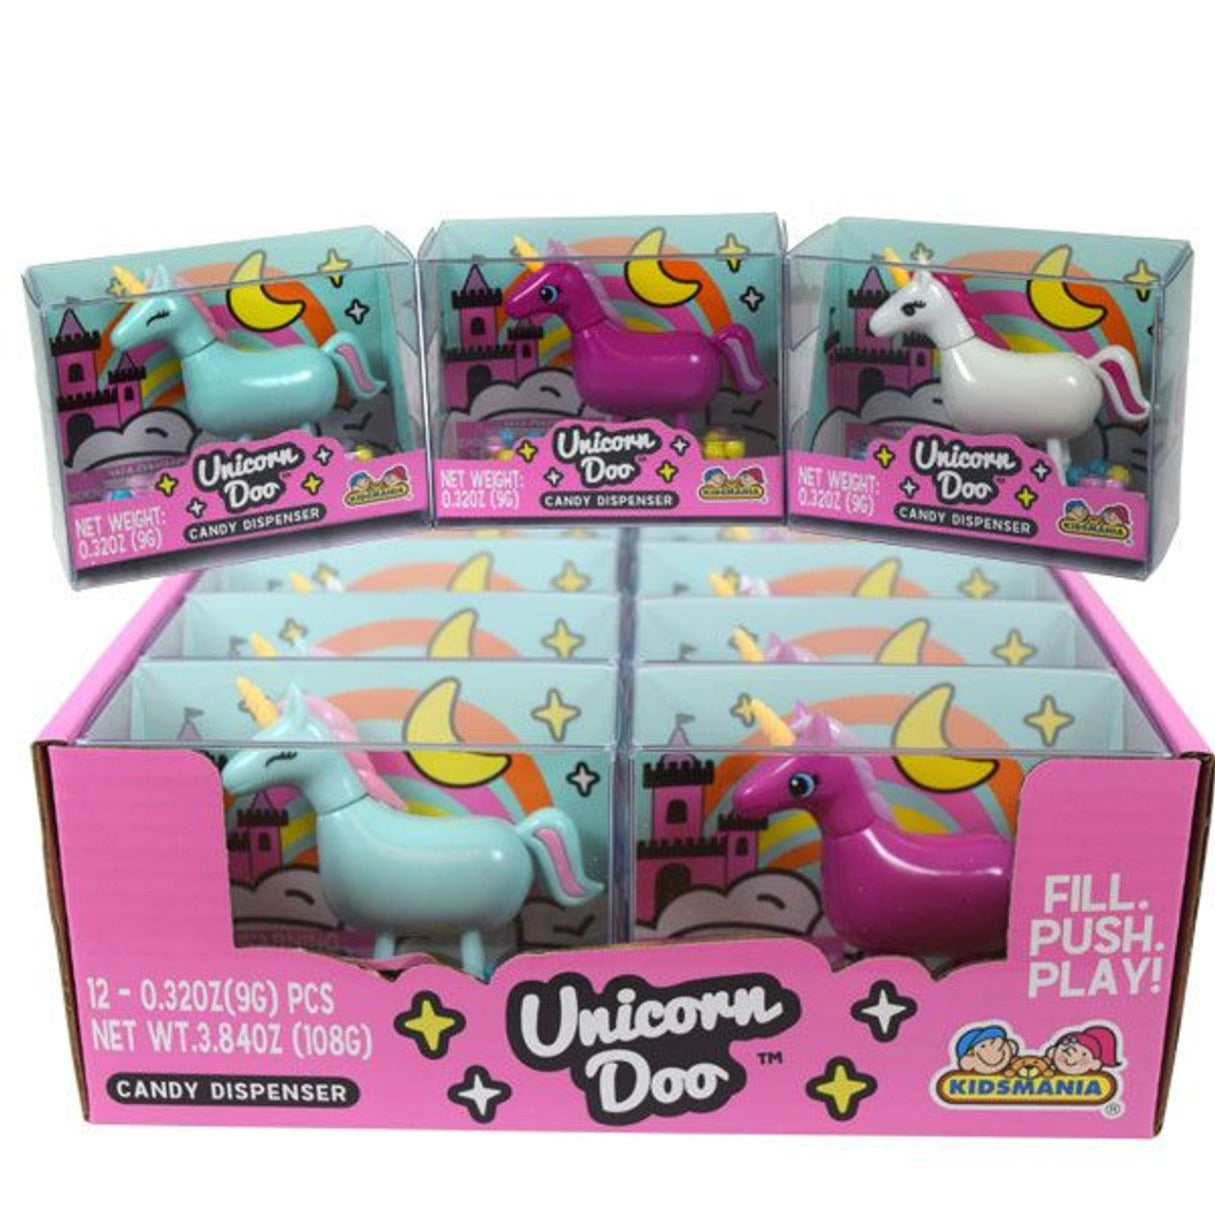 Kidsmania Unicorn Doo Doo Candy & Dispenser .32oz - 12ct